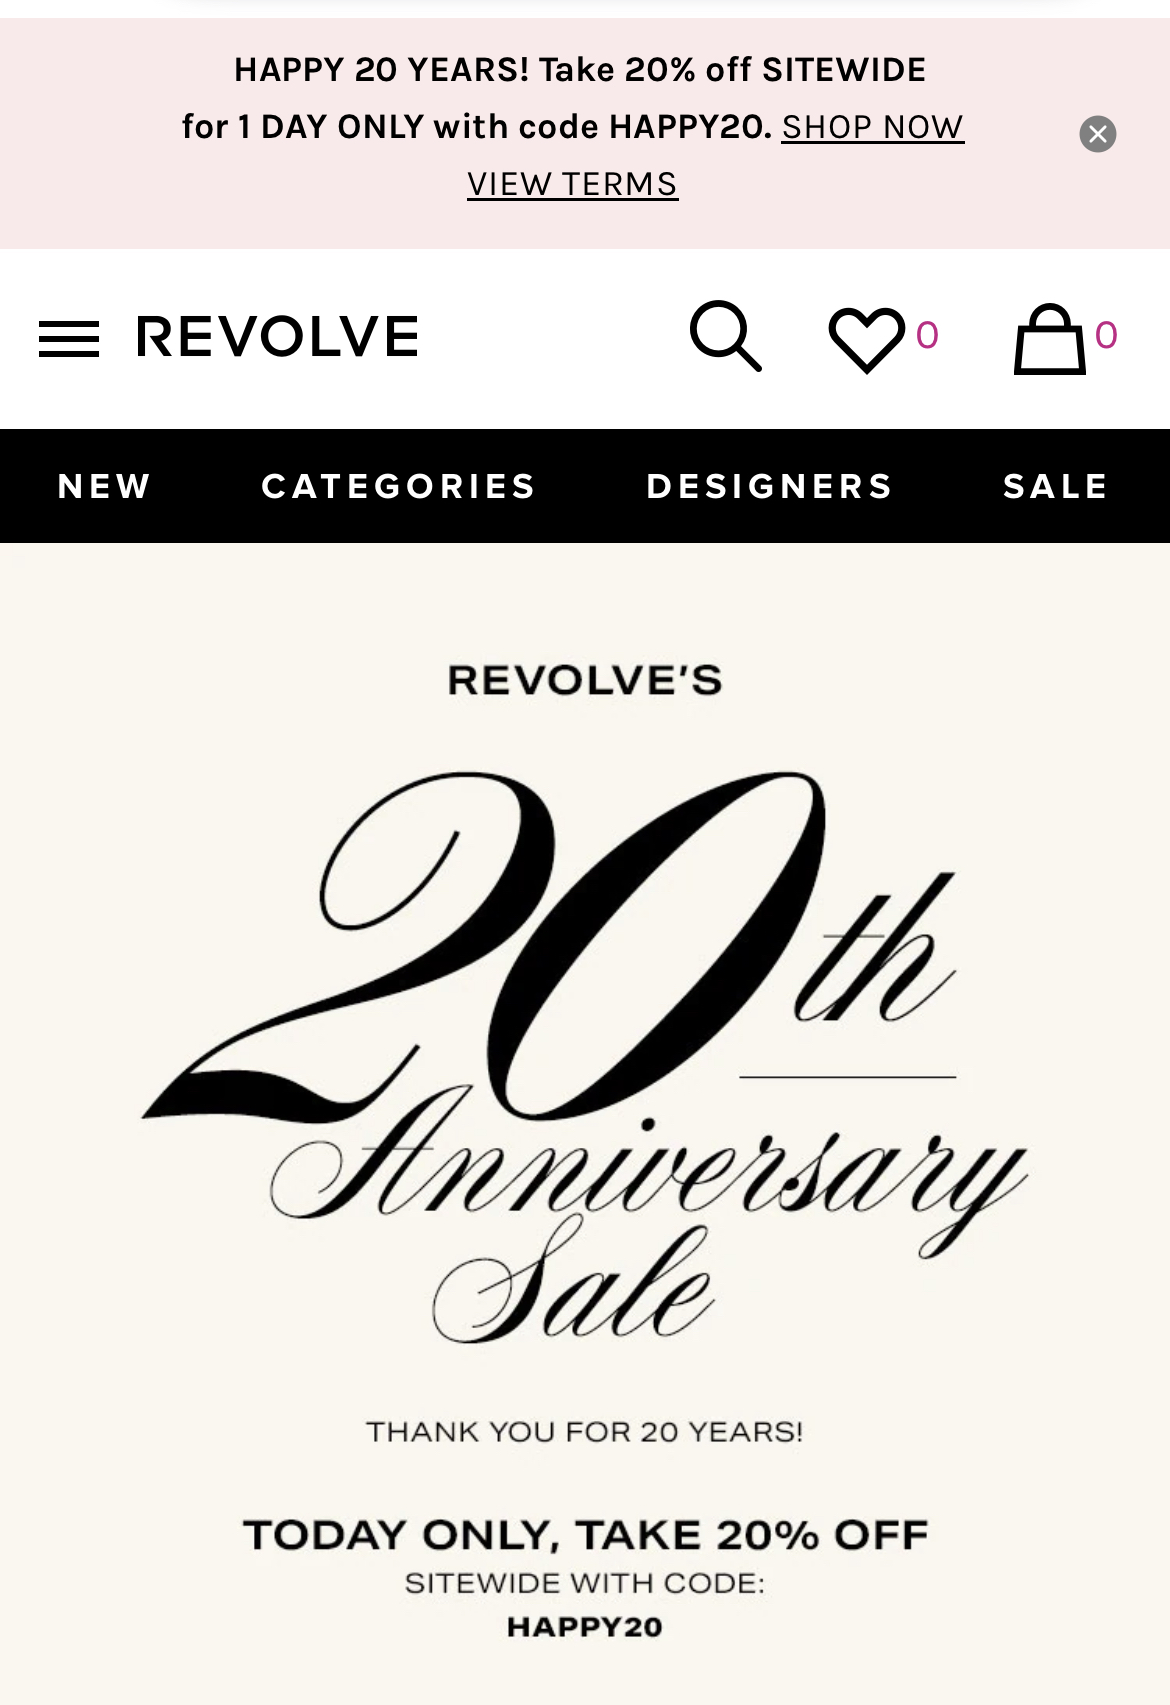 Revolve20周年庆祝-全场正价商品八折 仅限今天